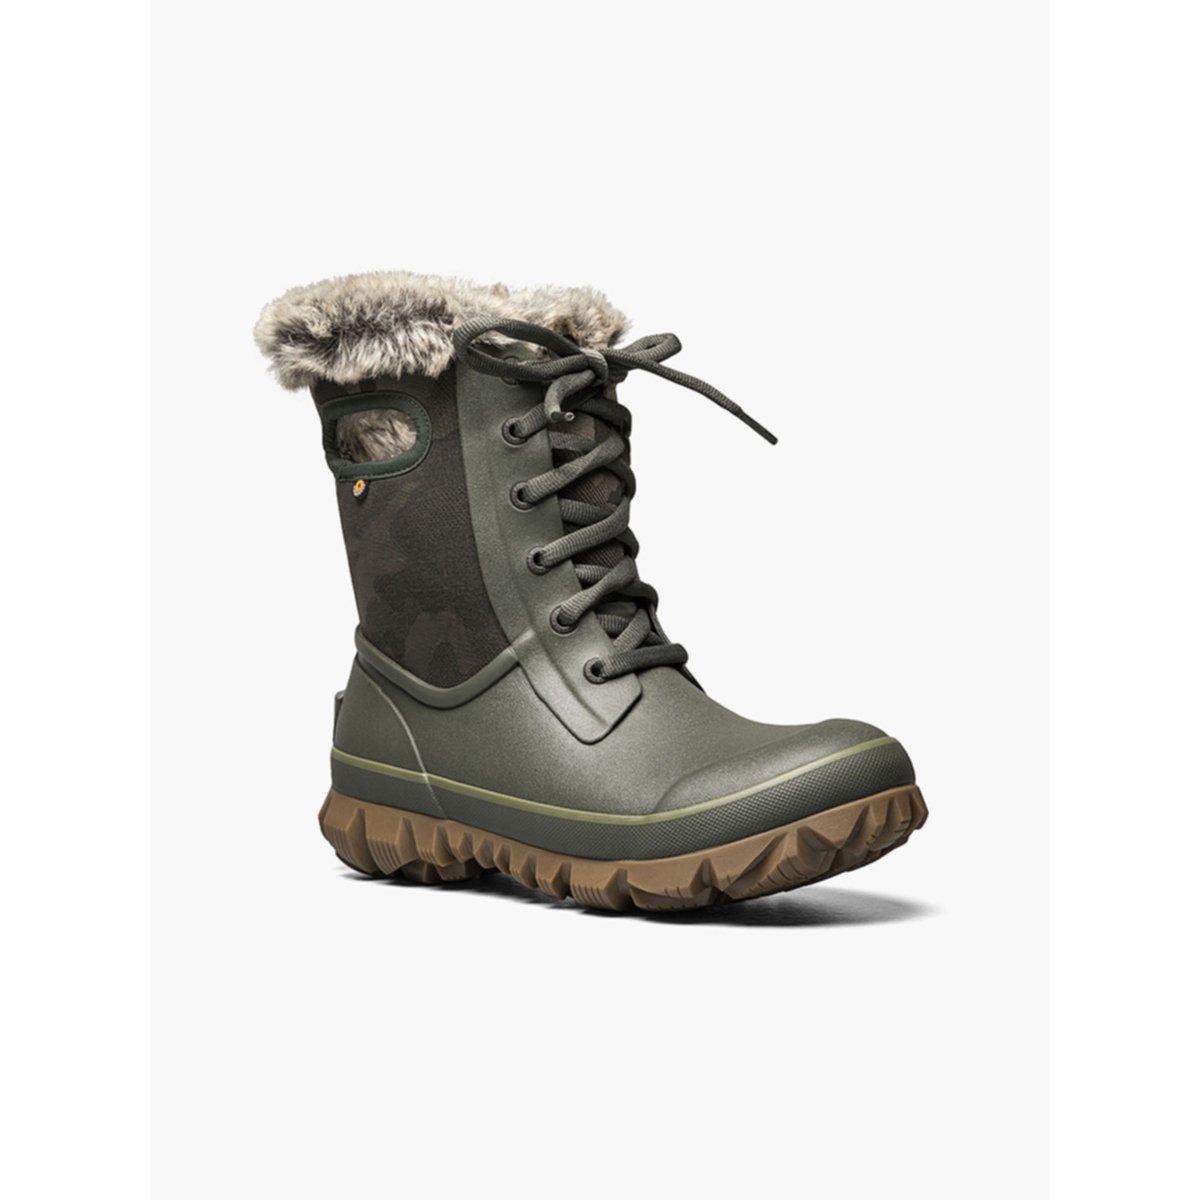 BOGS Women's Arcata Tontal Camo Waterproof Lace Up Snow Boots Dark Green - 72693-301 - Dark Green, 9